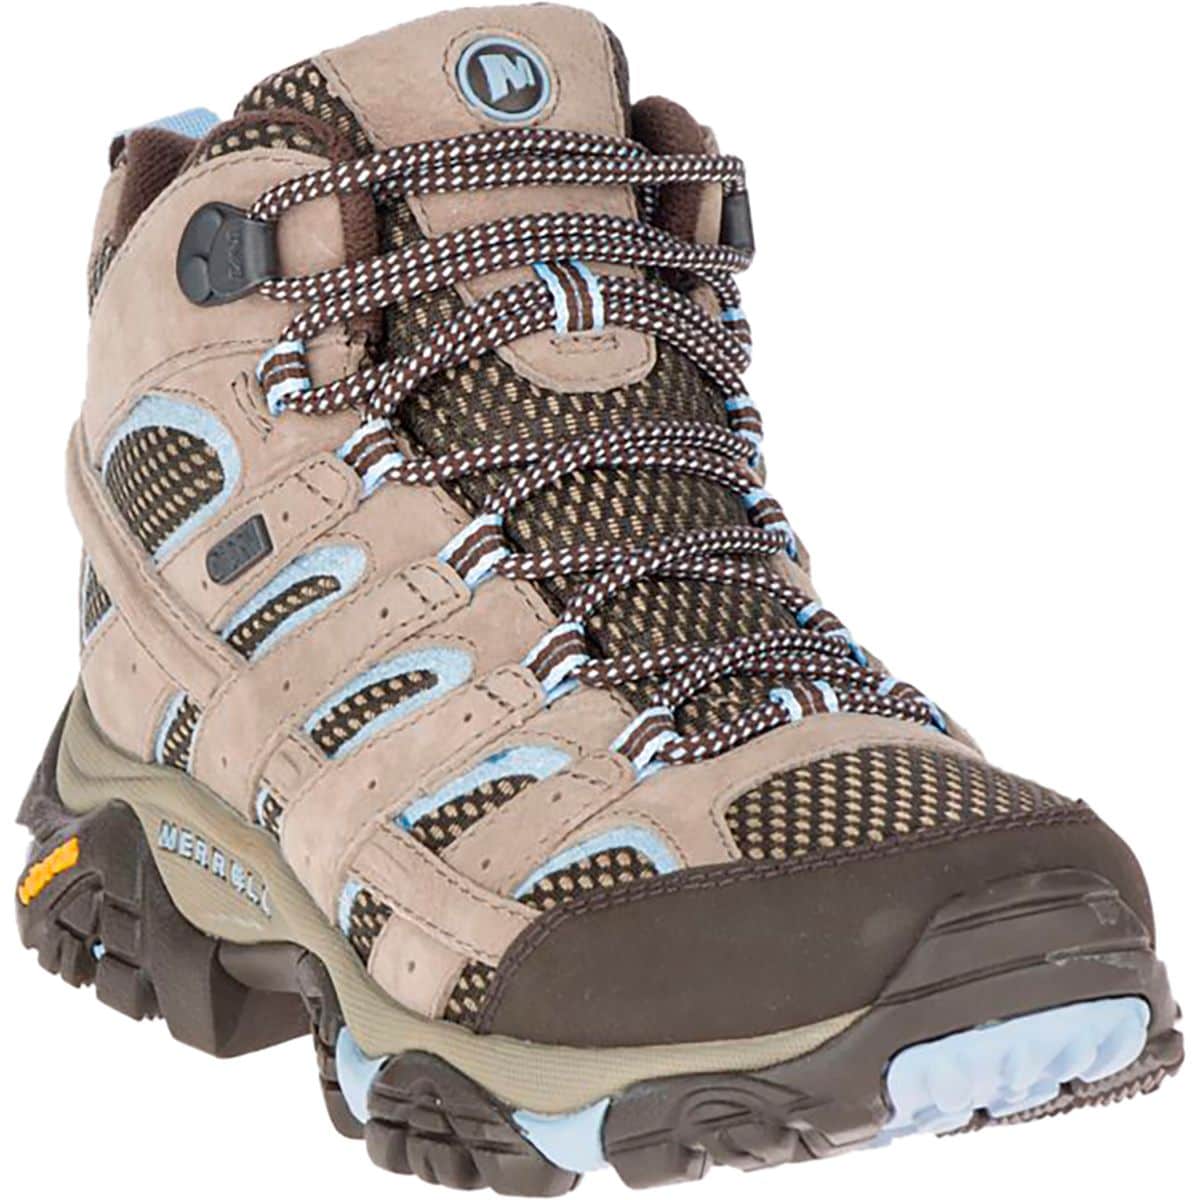 Merrell Moab 2 Mid Waterproof Hiking Boot - Women's | Backcountry.com